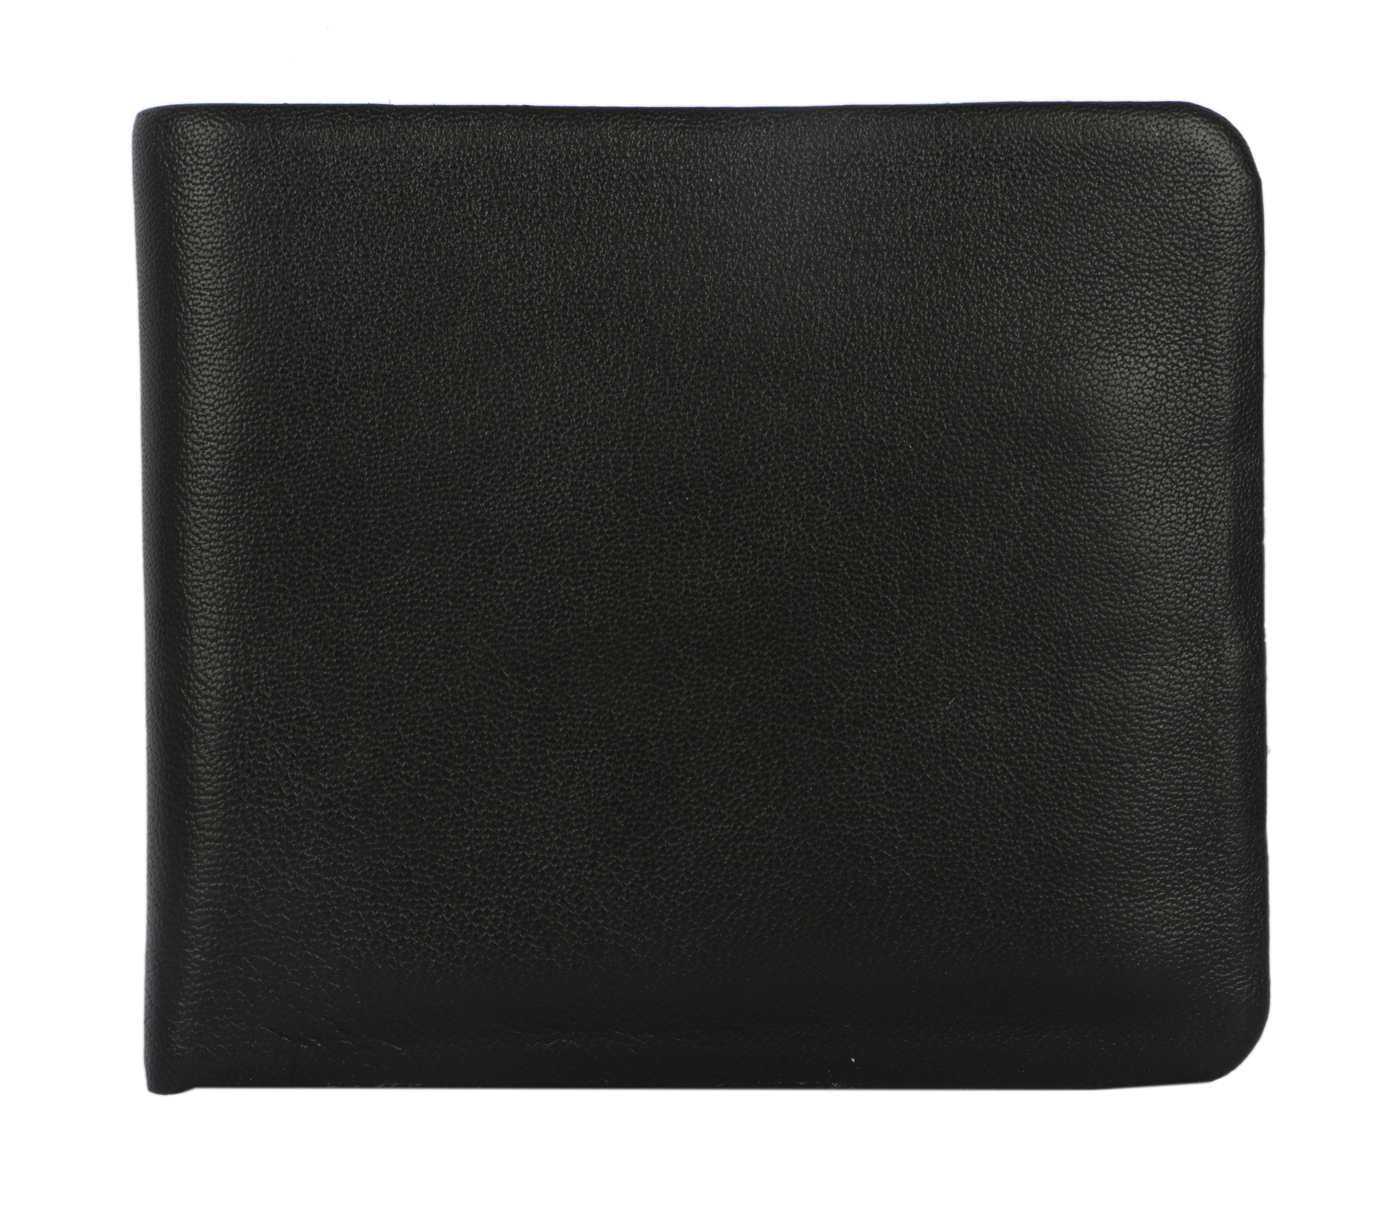 VW1-Ashton-Men's bifold wallet with coin pocket in Genuine Leather - Black